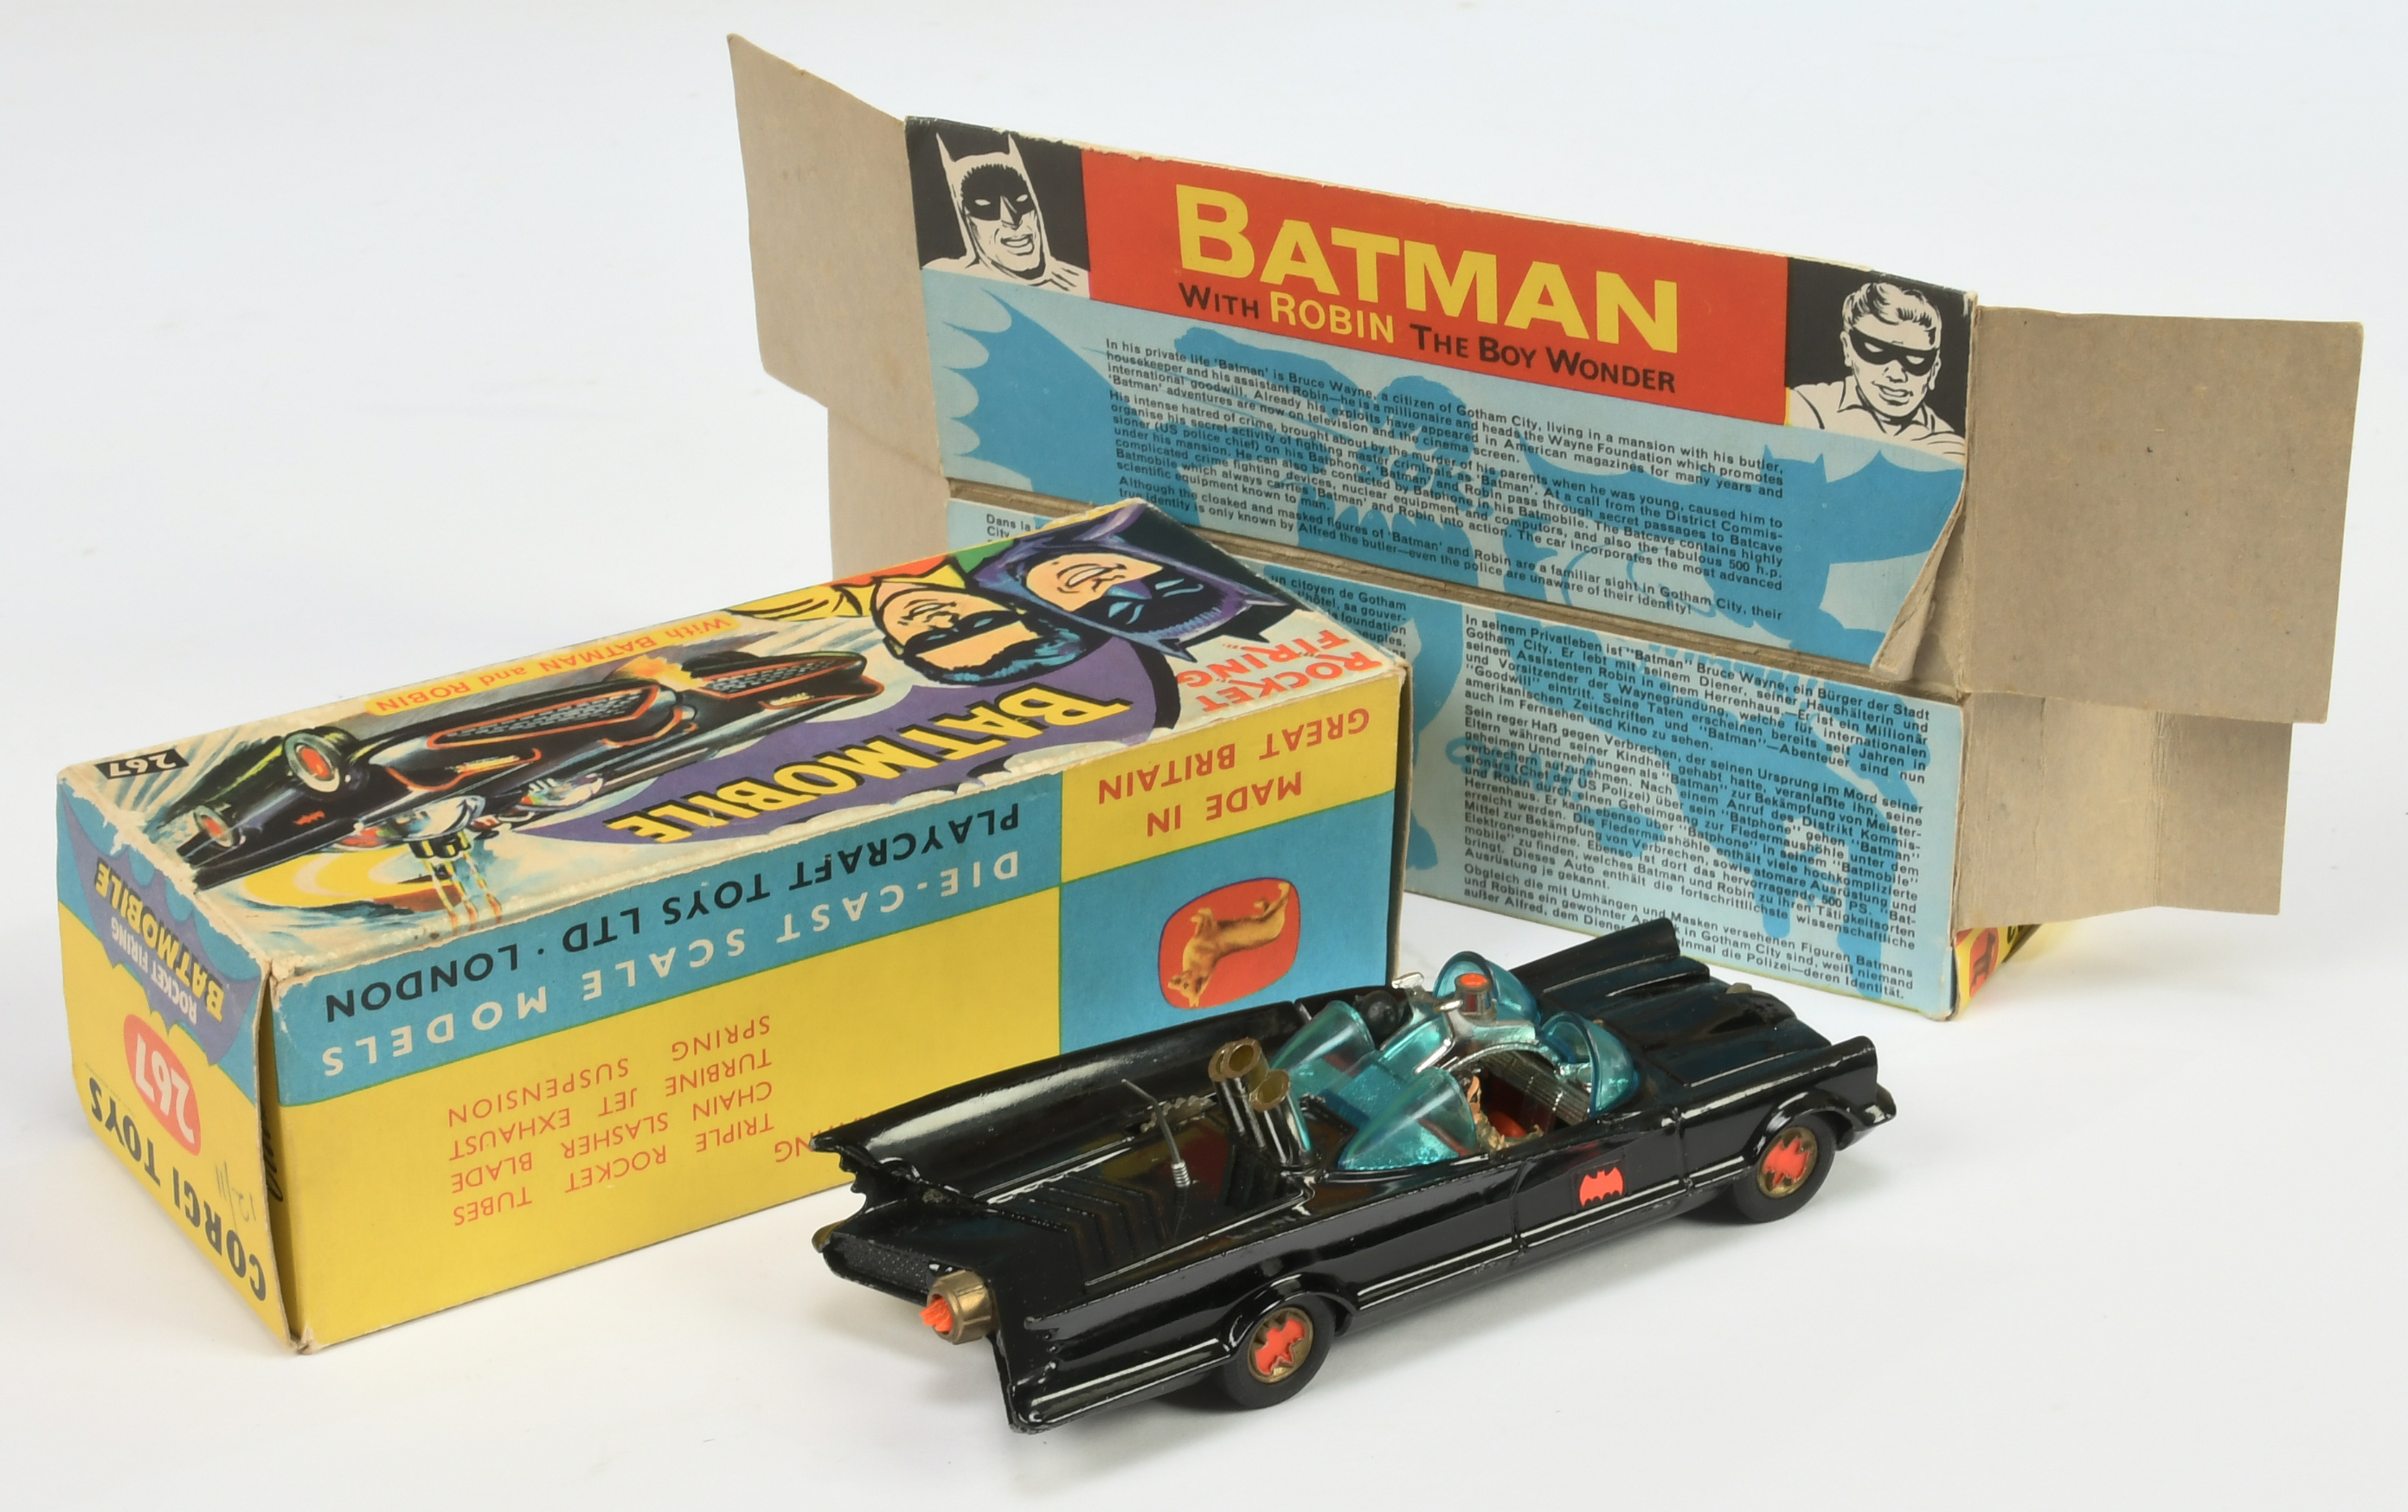 Corgi Toys 267 "Batman" Batmobile - Black body, red bat hubs,blue windows, with "Batman & Robin" ... - Image 2 of 2